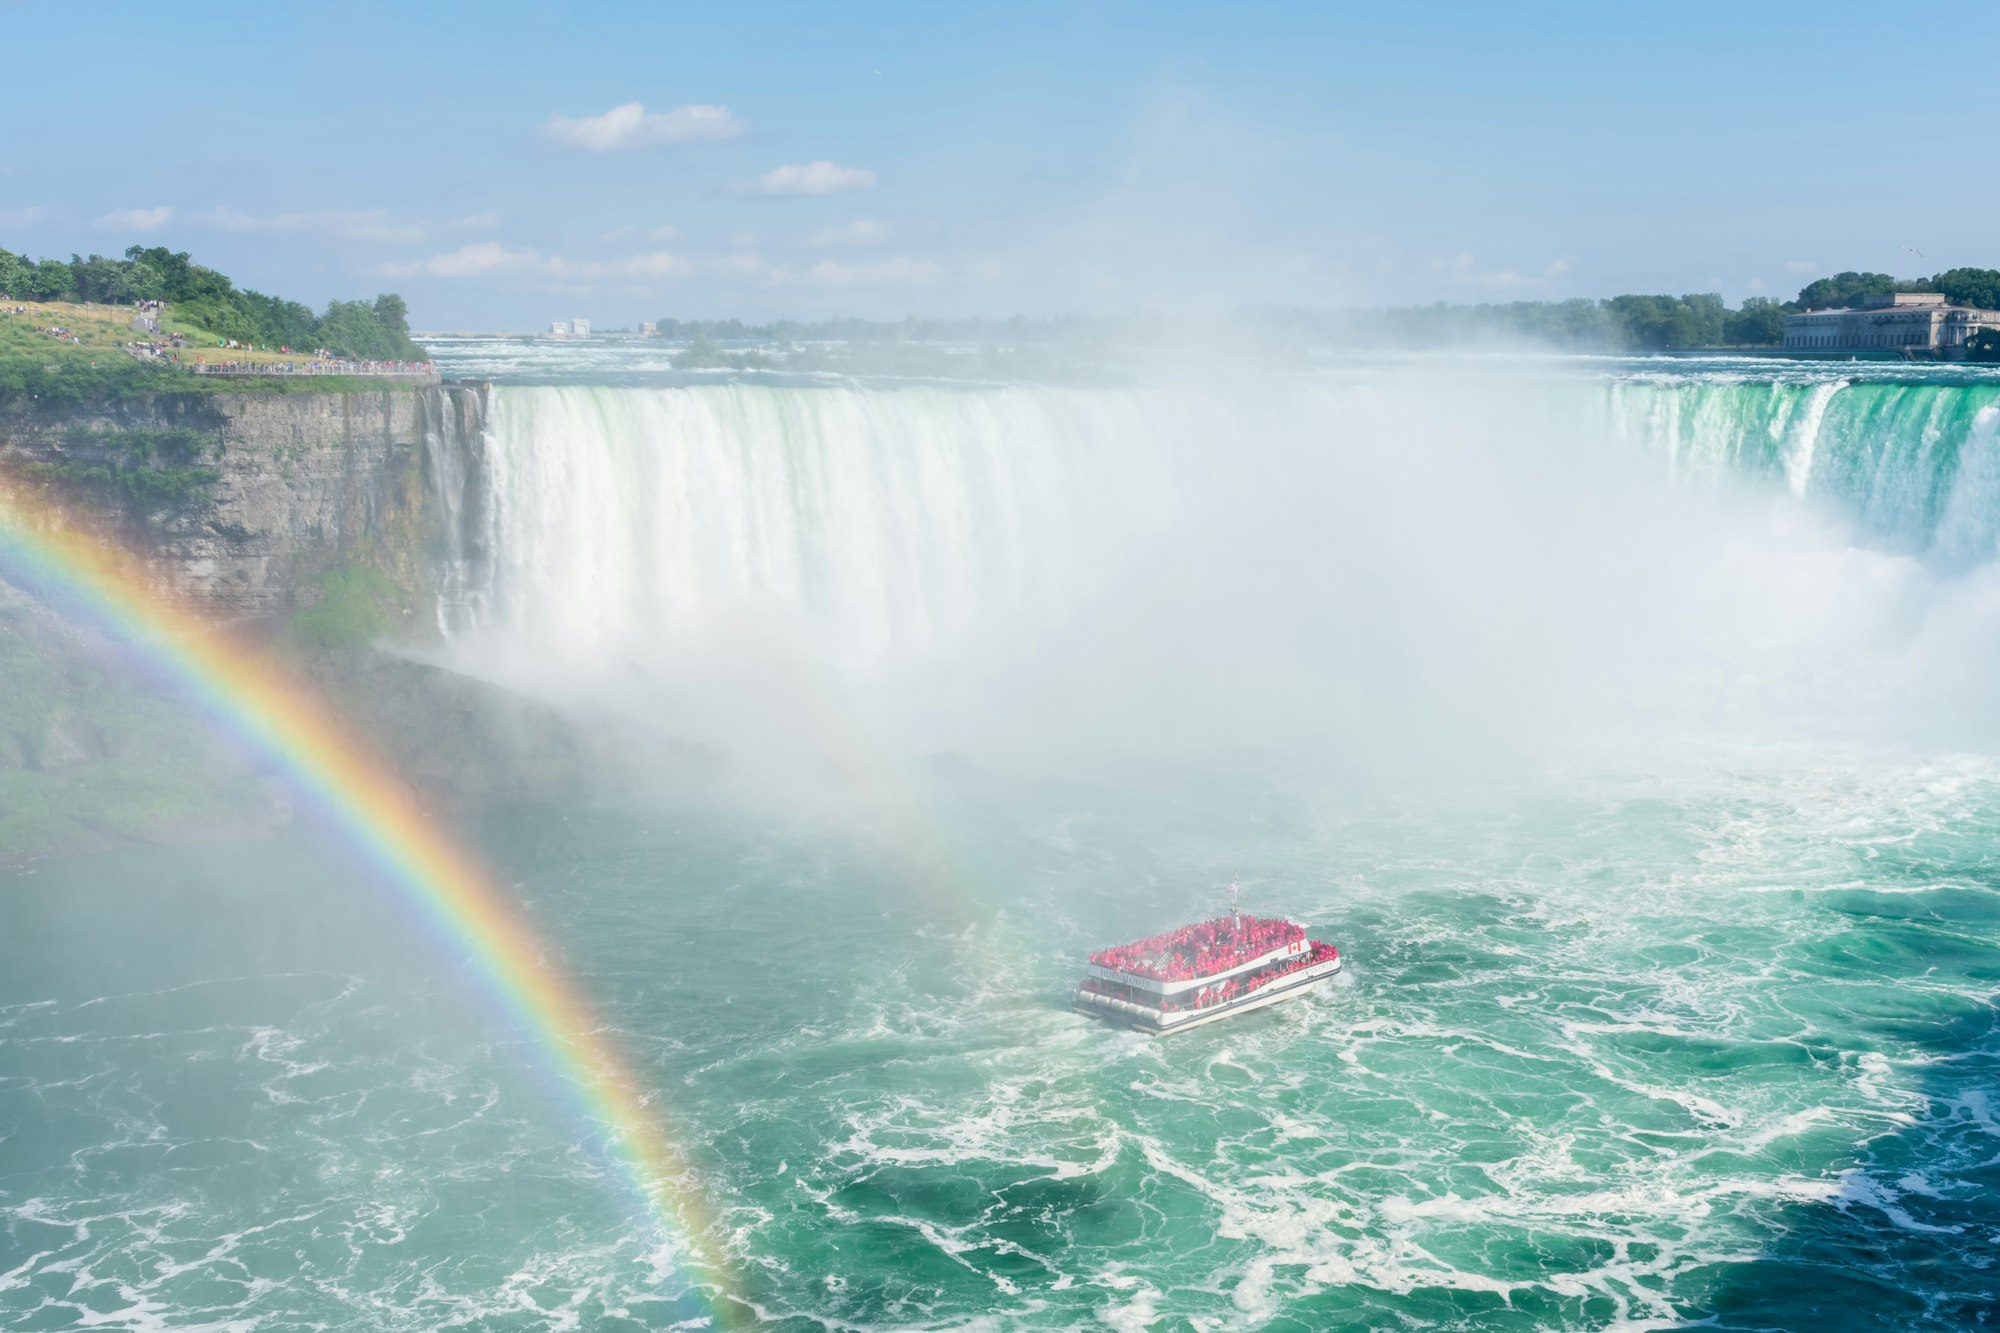 Double rainbow over Niagara Falls